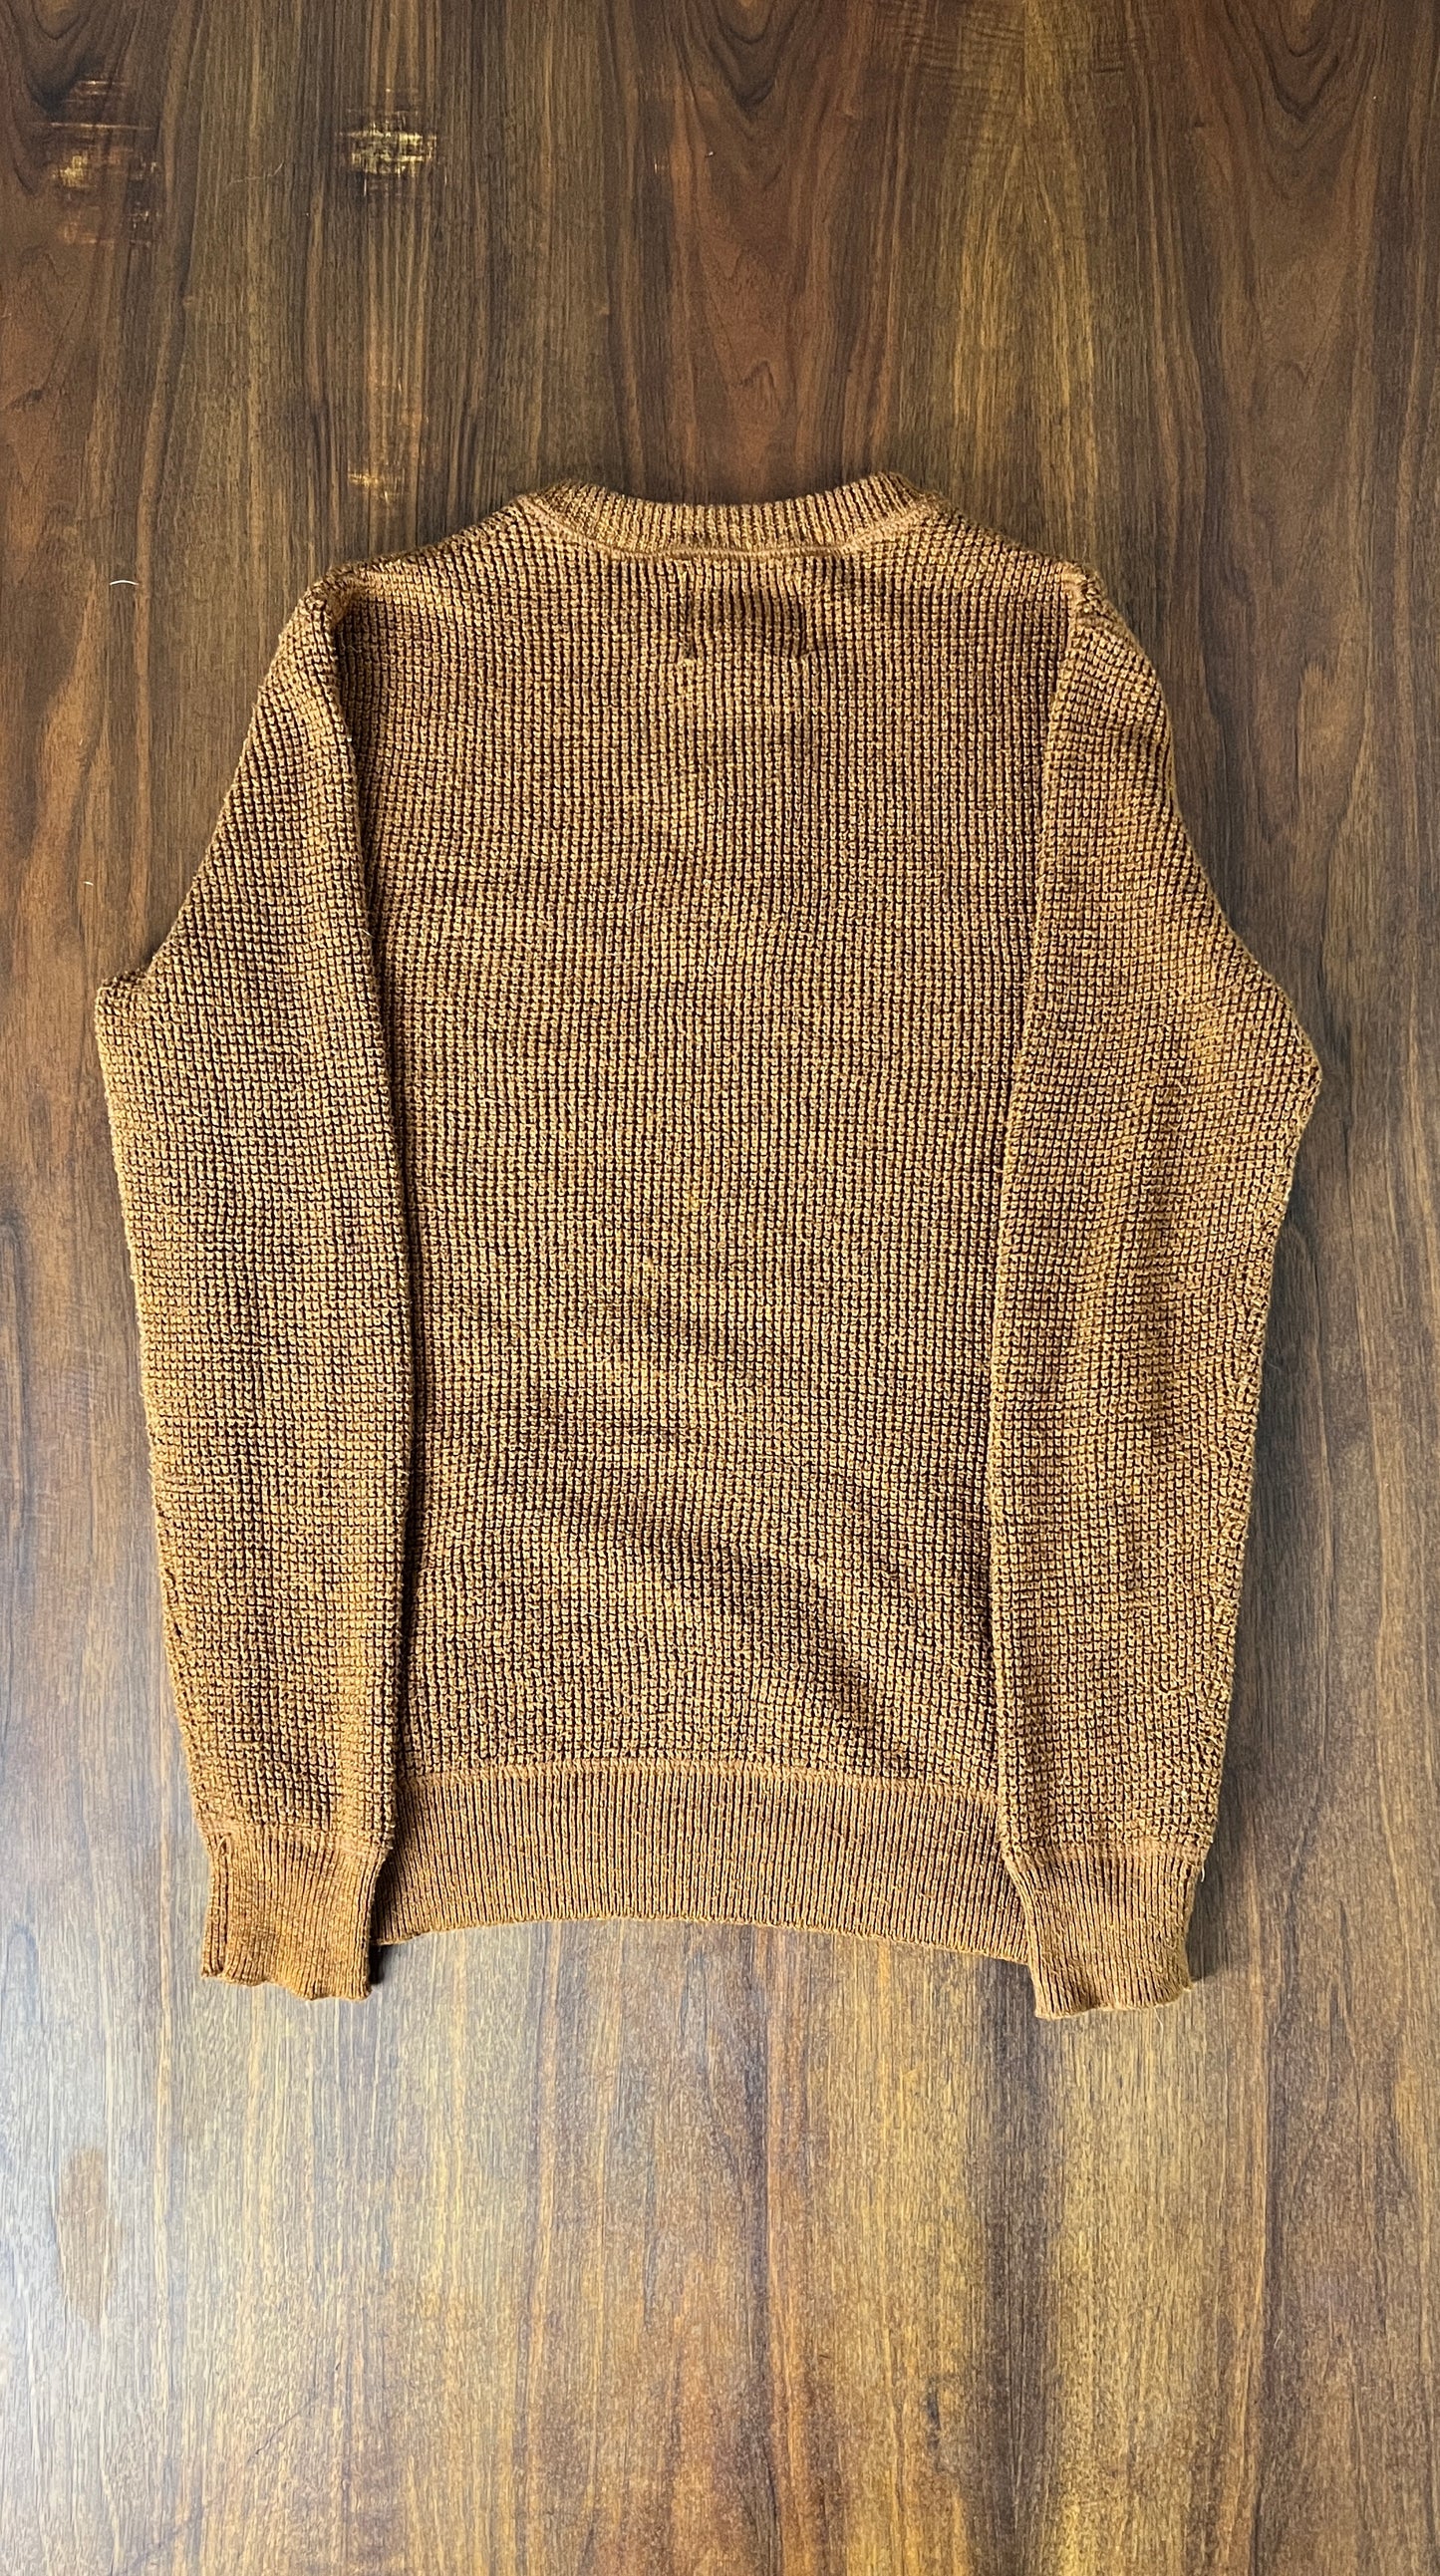 It’s a sweater